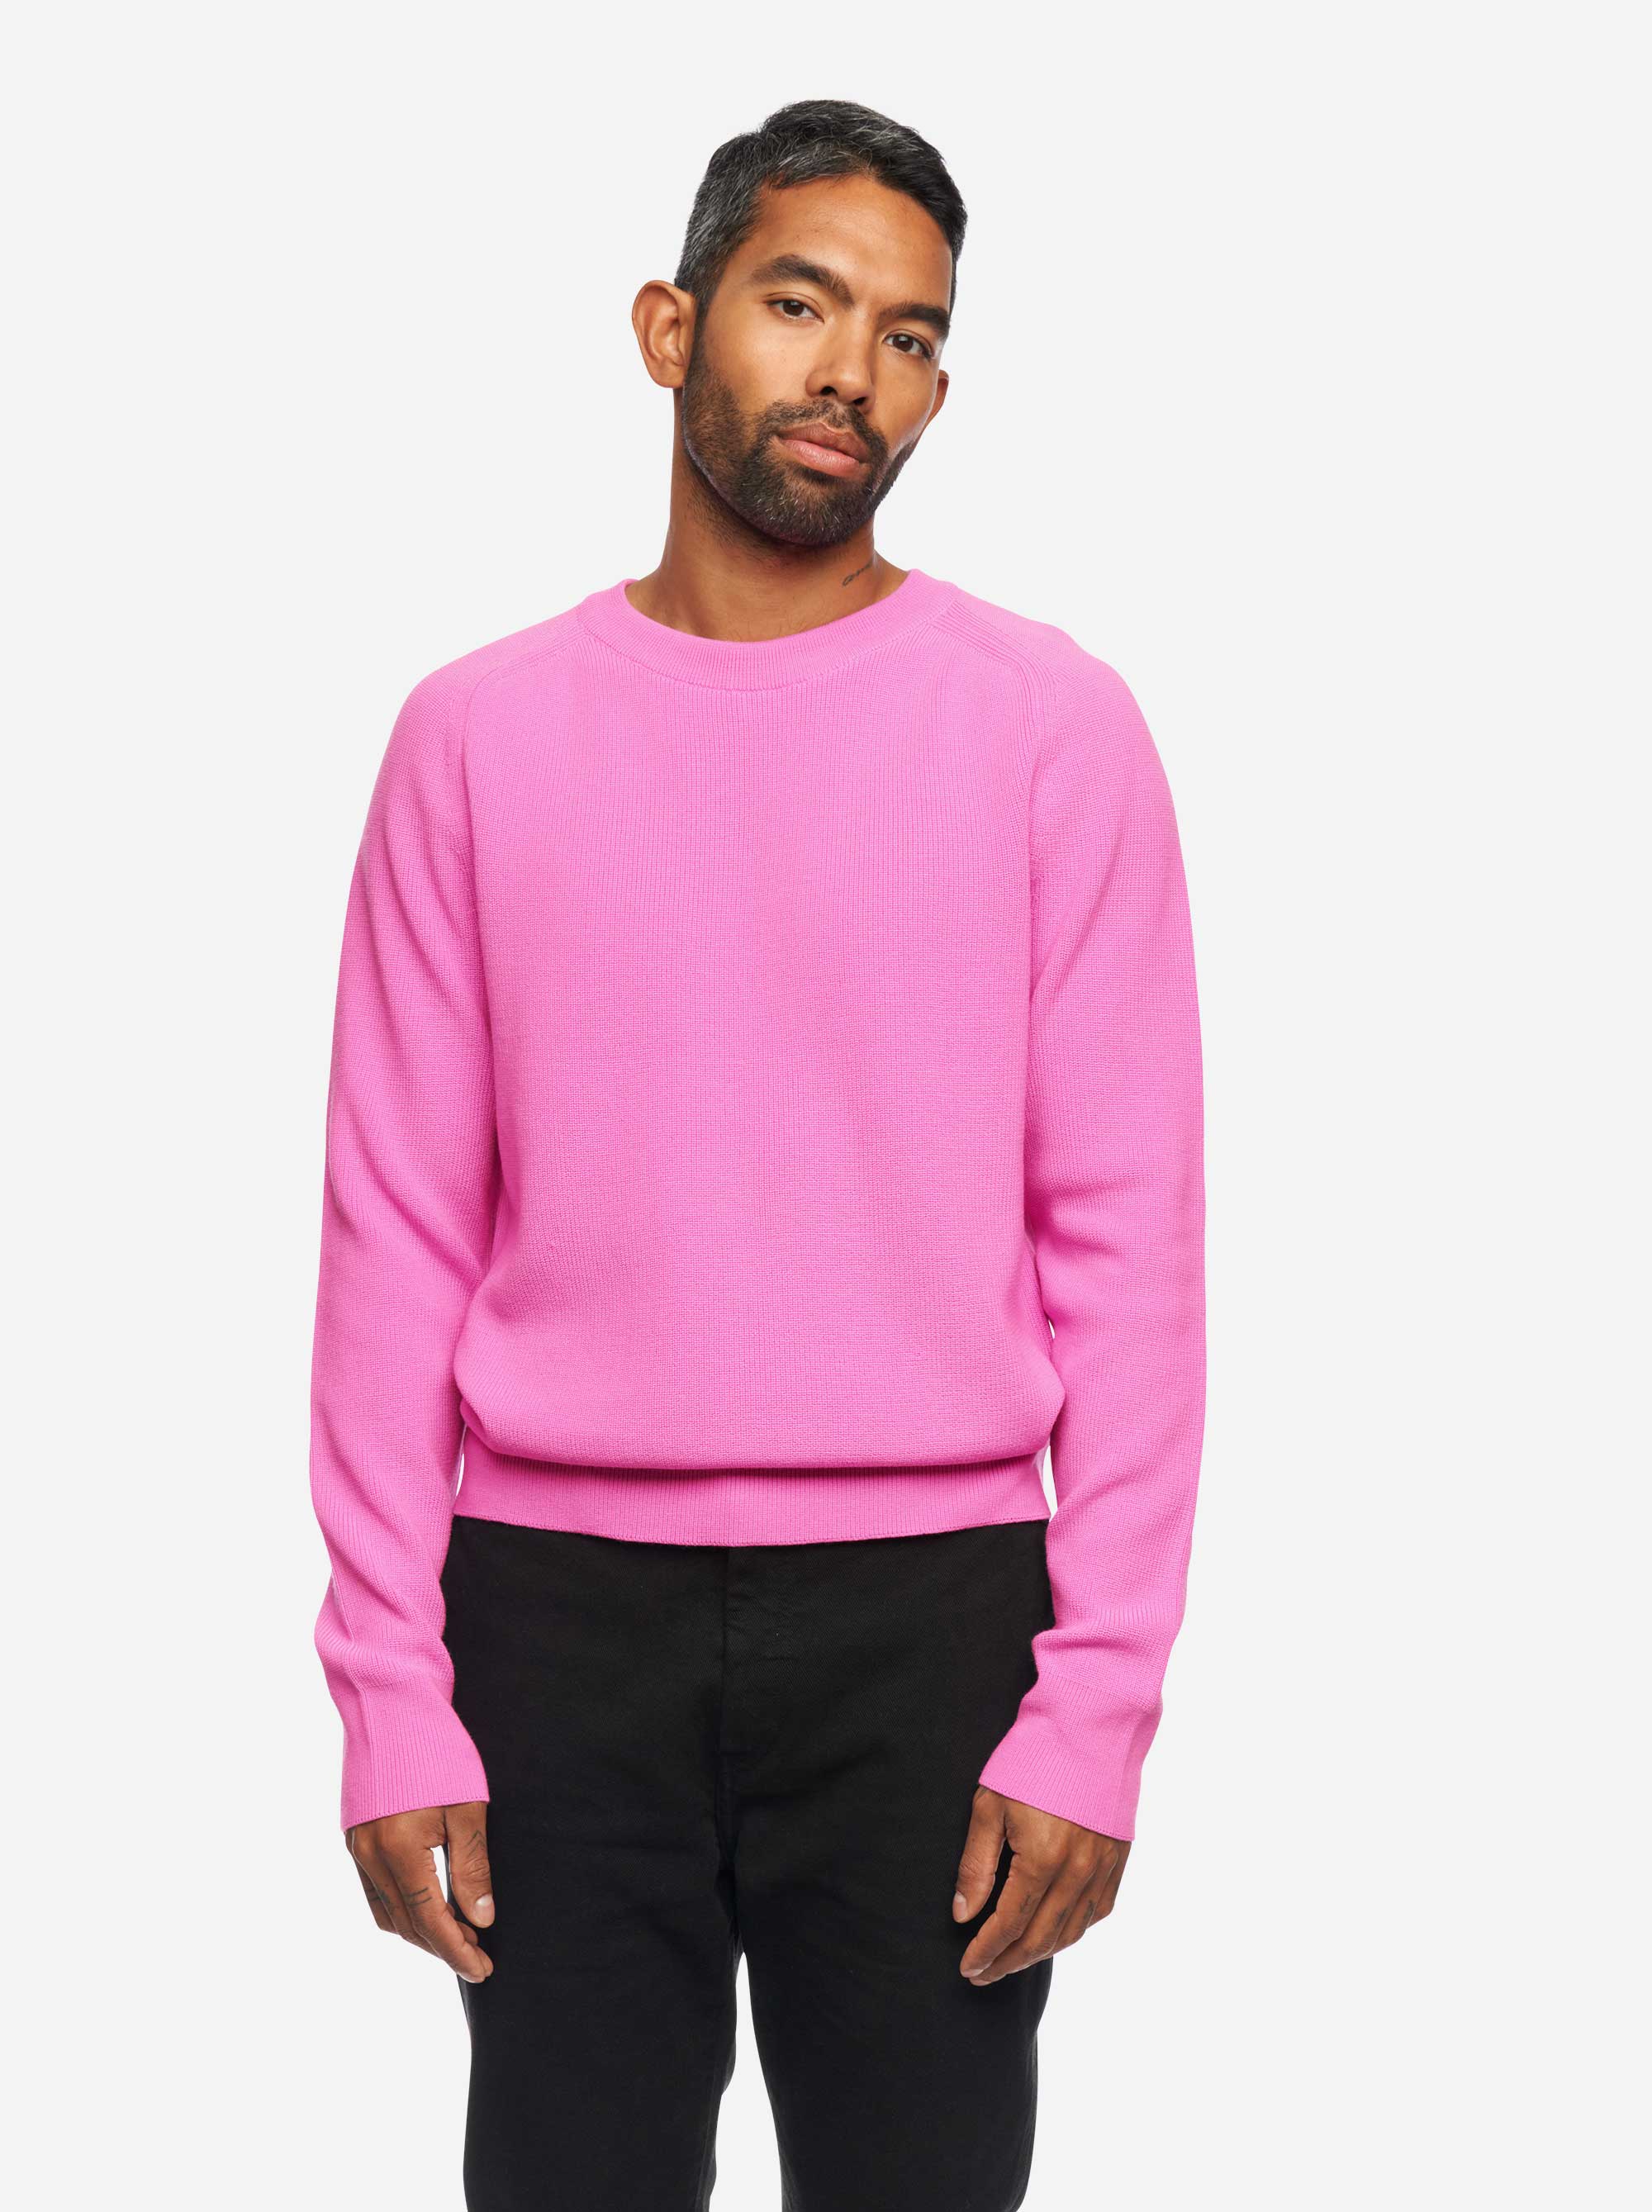 Teym - The Merino Sweater - Crewneck - Men - Bright Pink - 1